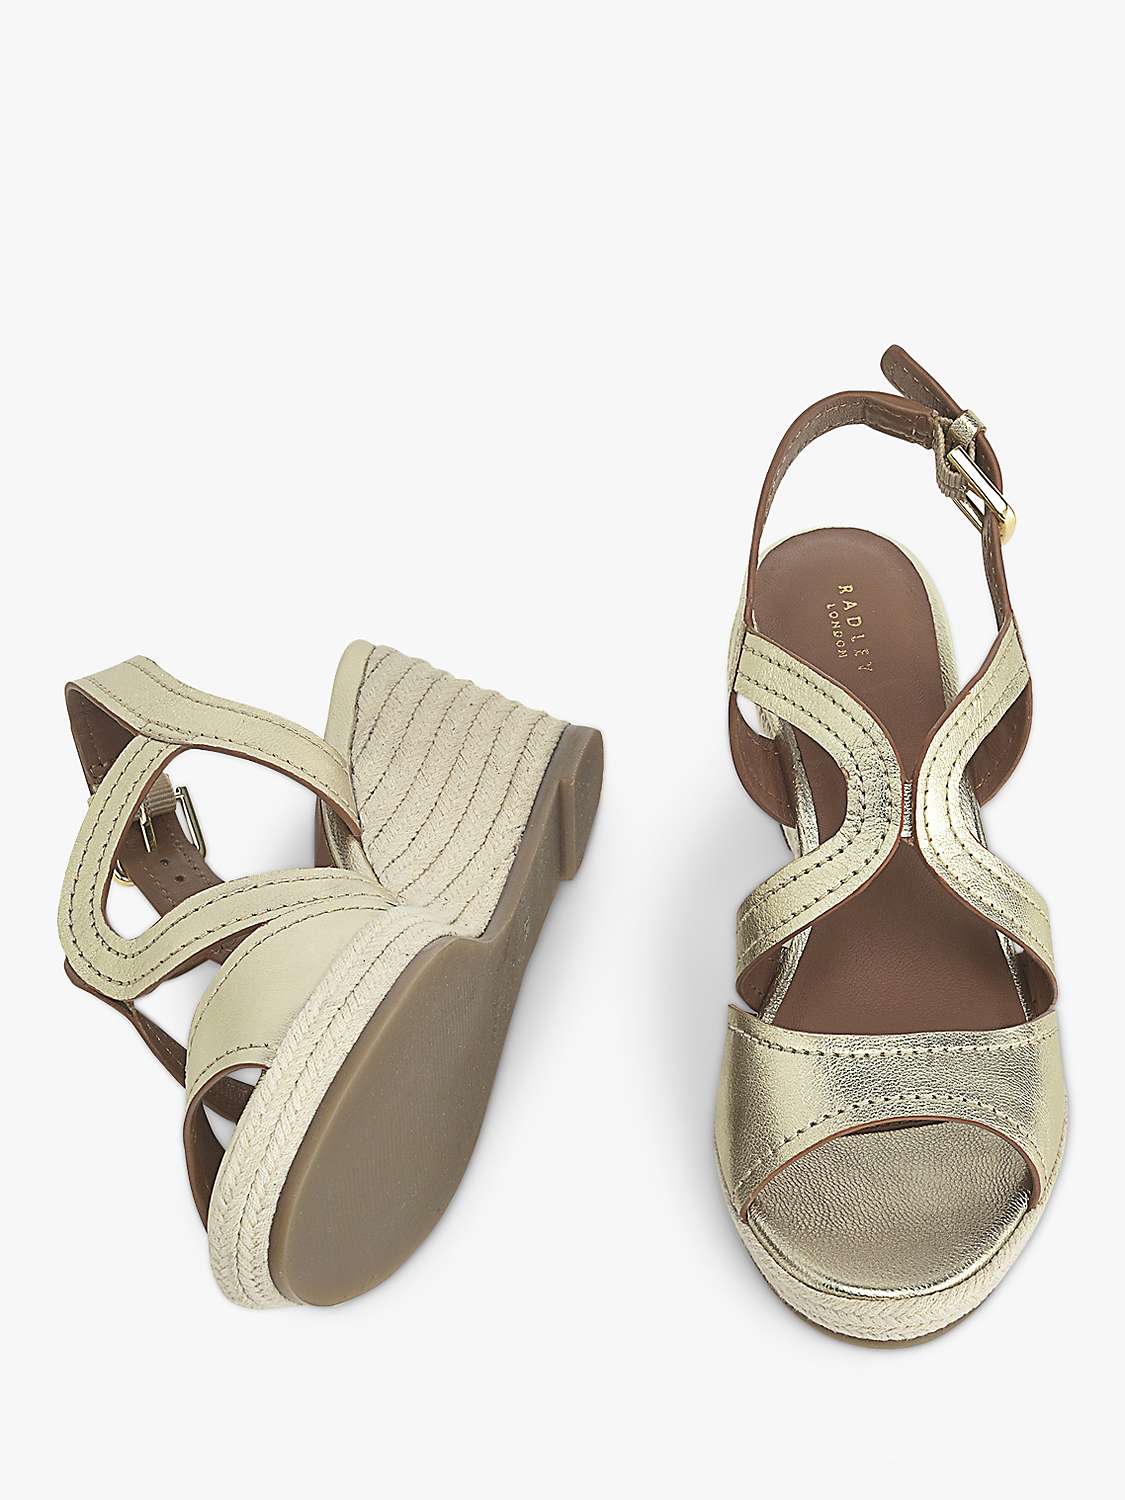 Buy Radley Florence Close Leather Wedge Sandals Online at johnlewis.com